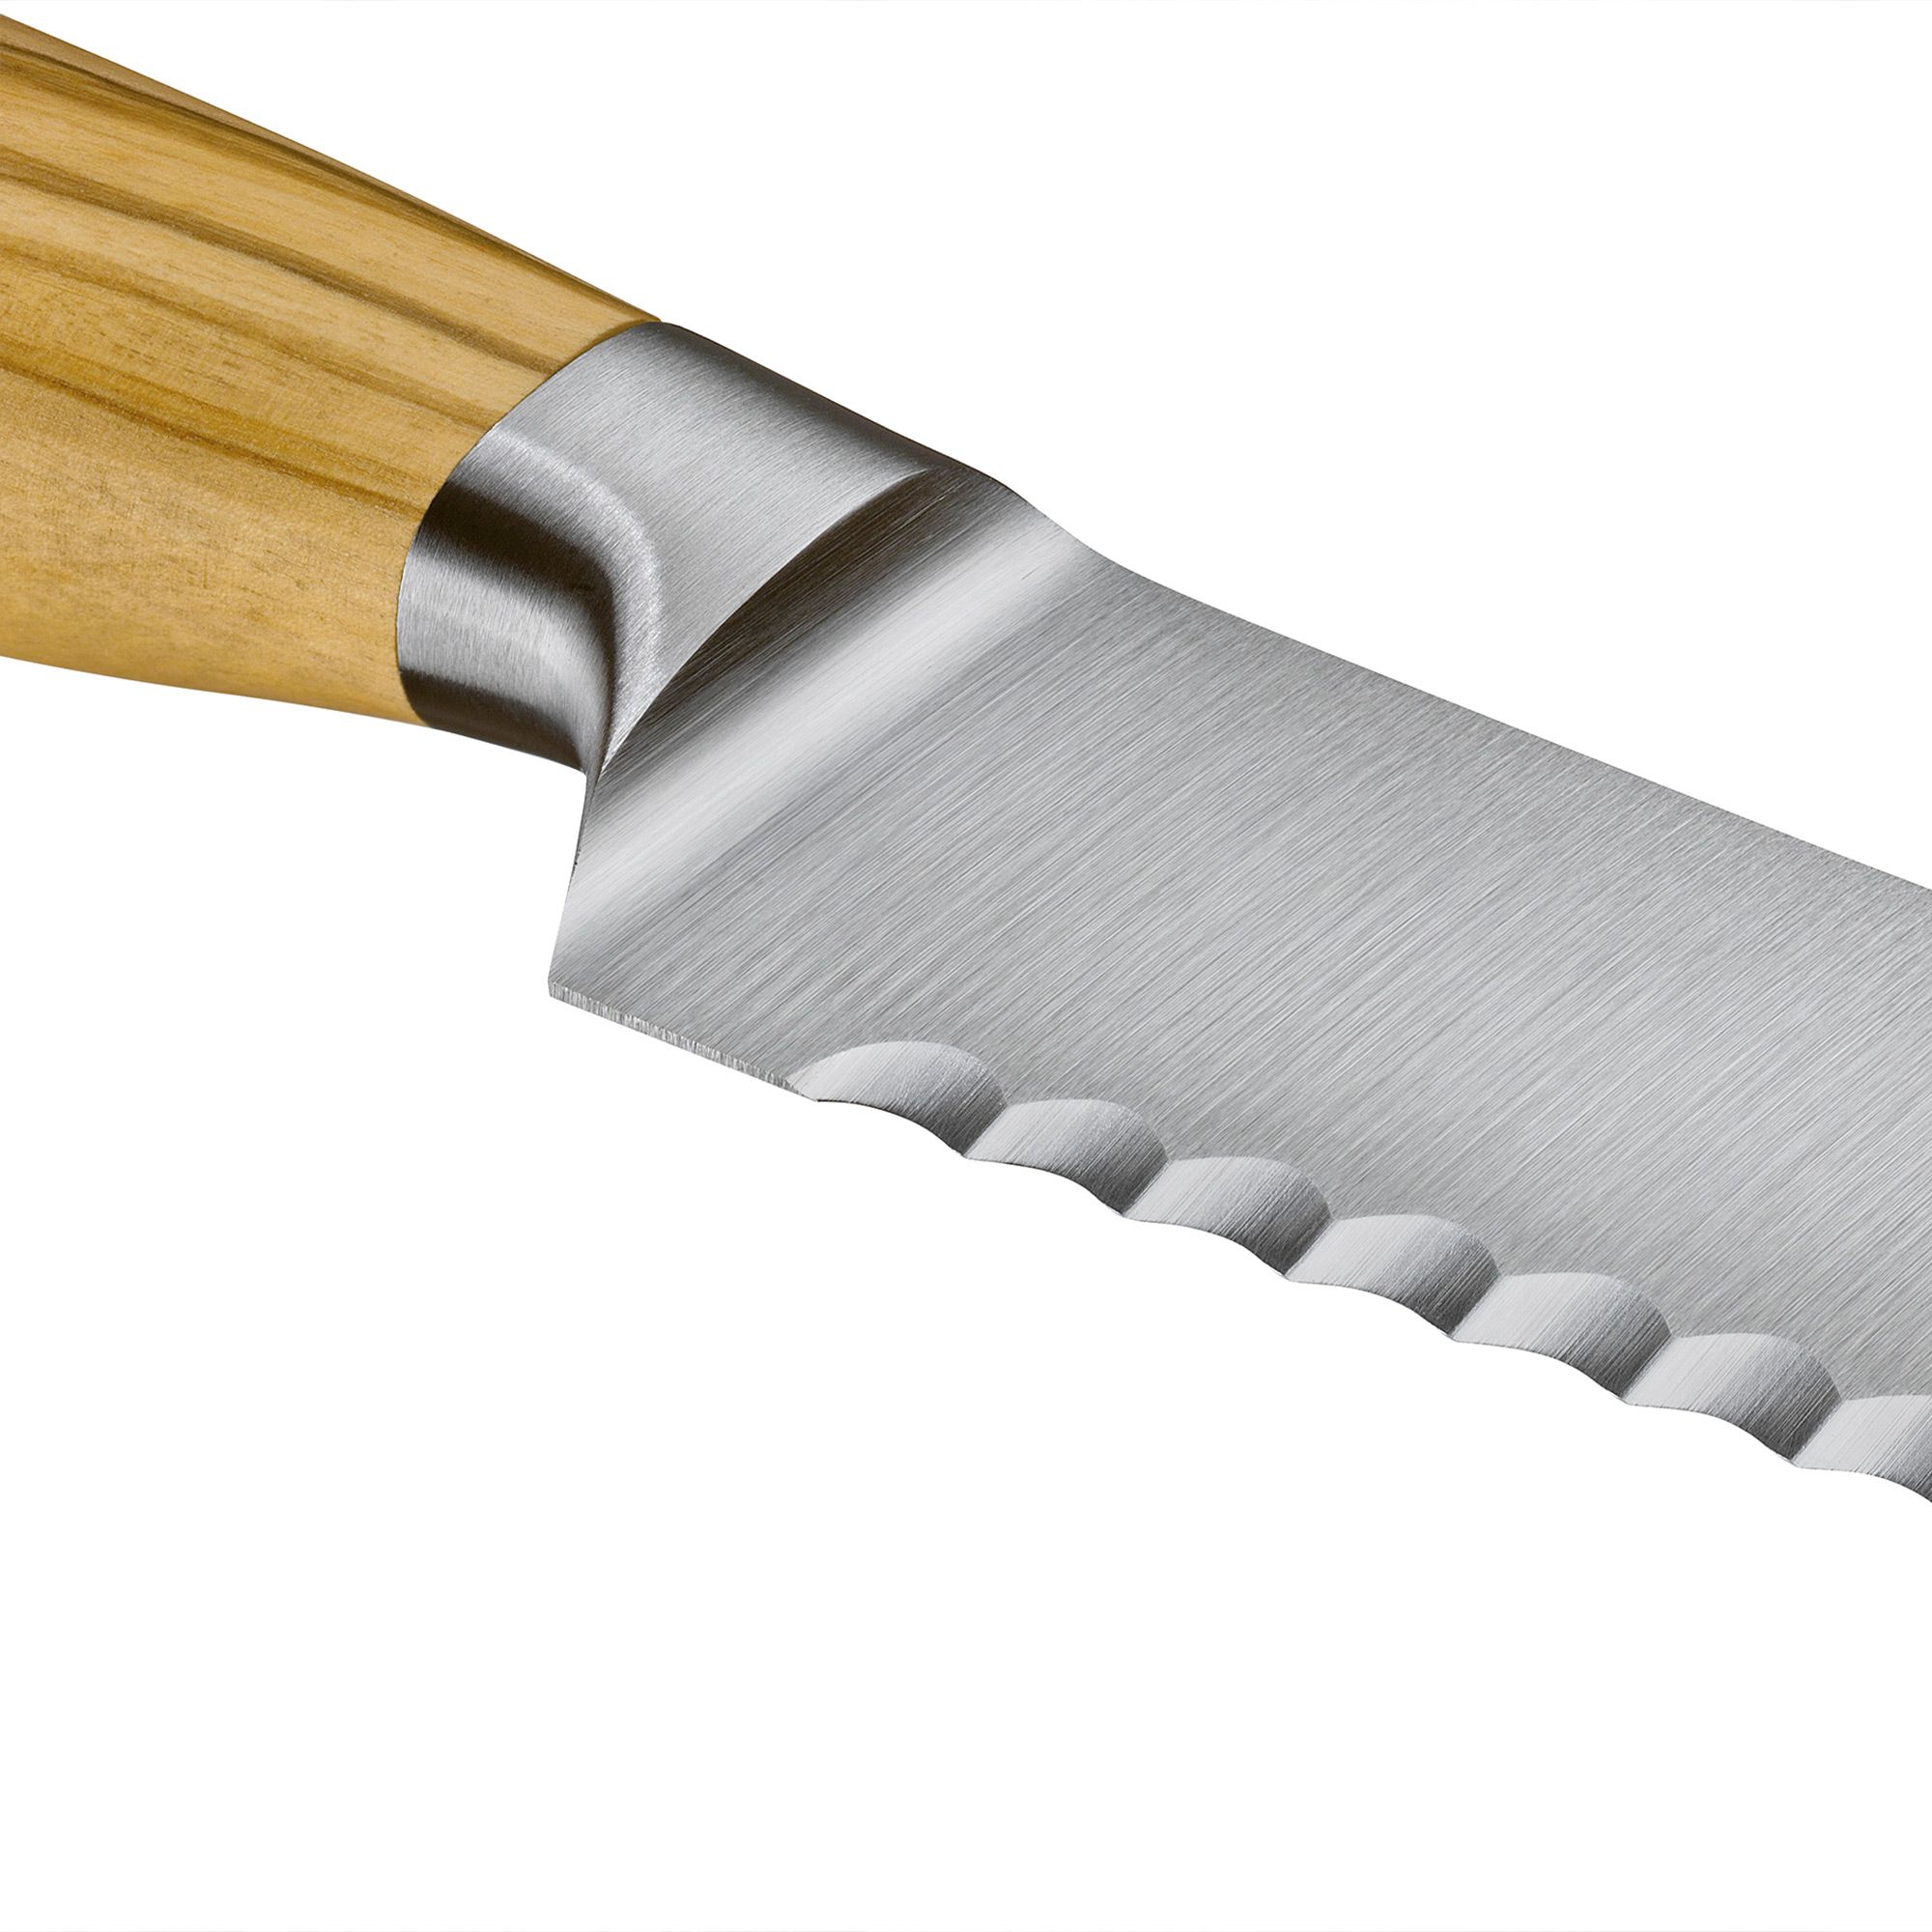 Zassenhaus - bread knife 22 cm - EDITION OLIVE